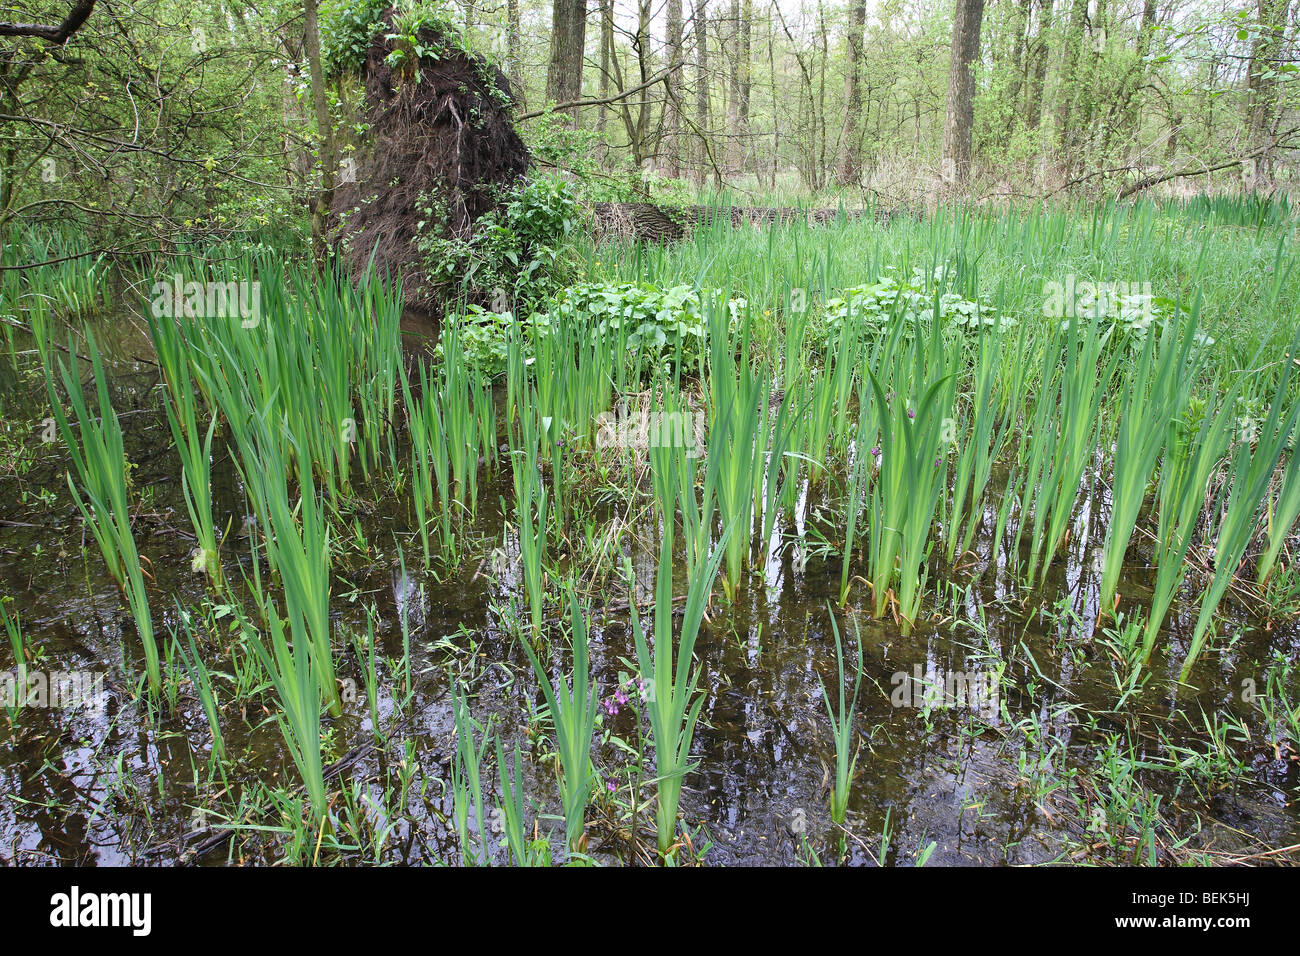 Iris gialla / bandiera gialla iris (Iris pseudacorus) nella foresta di brook, Belgio Foto Stock